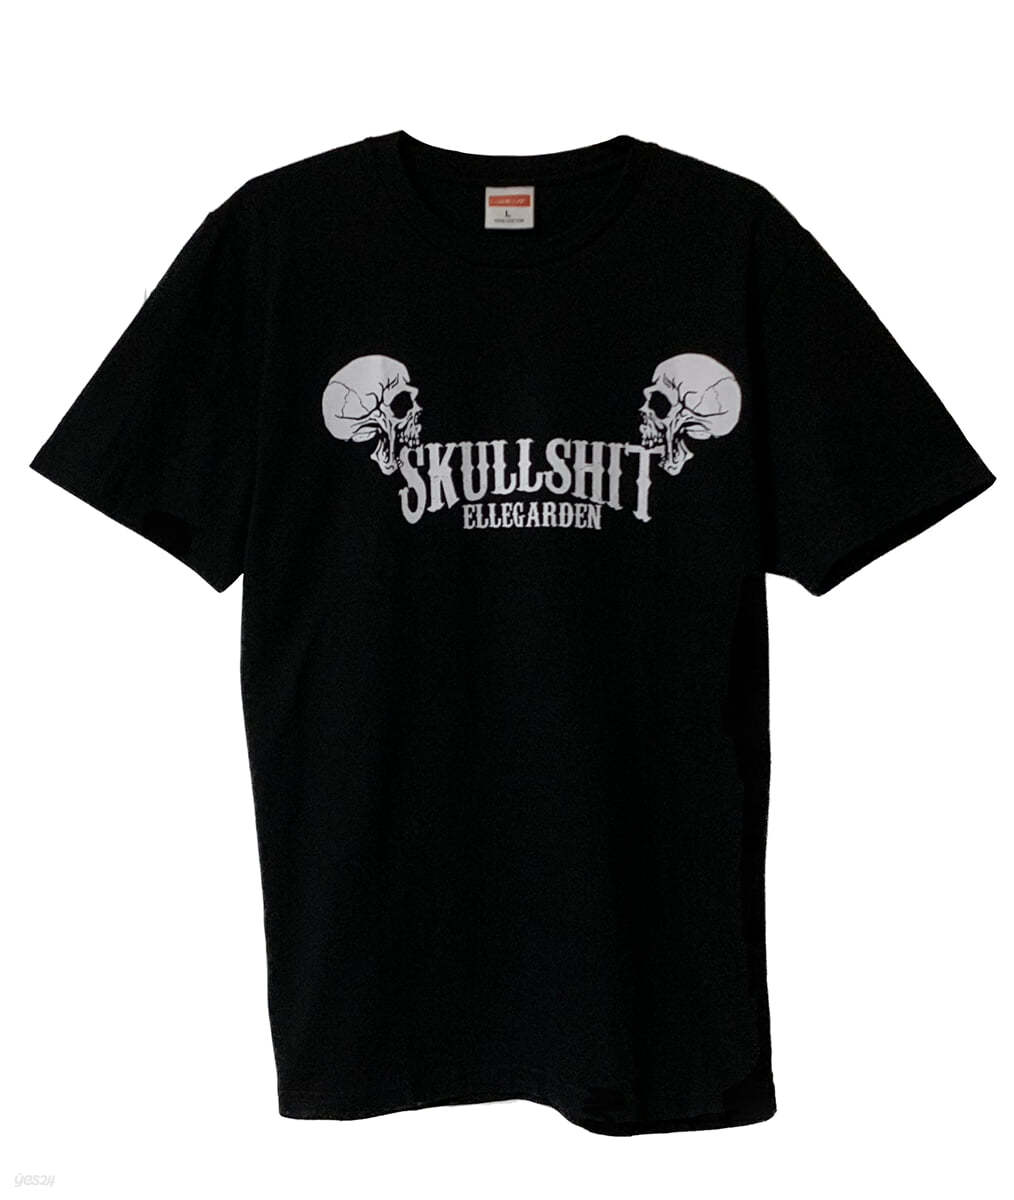 Ellegarden (엘르가든) - Tour Skullshit 티셔츠 [L사이즈]